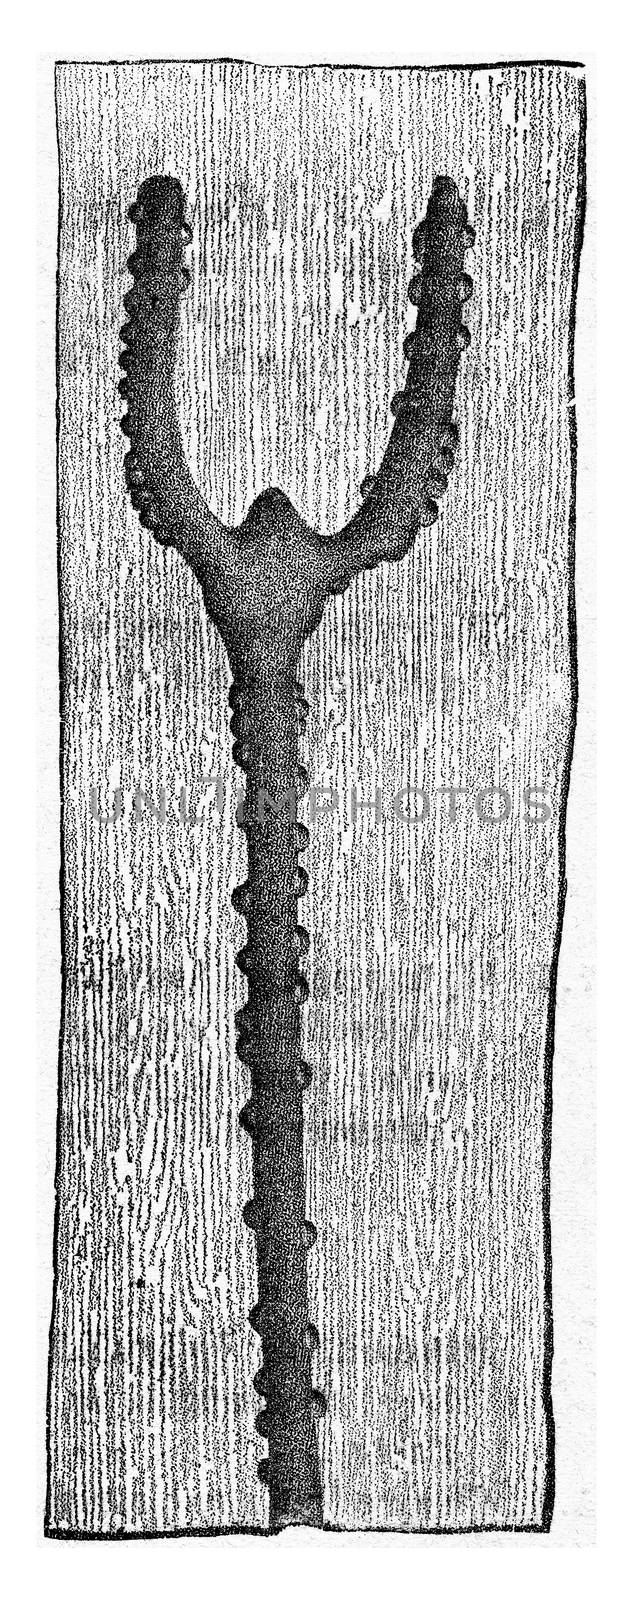 Tomicus sexdentatus, vintage engraved illustration.
